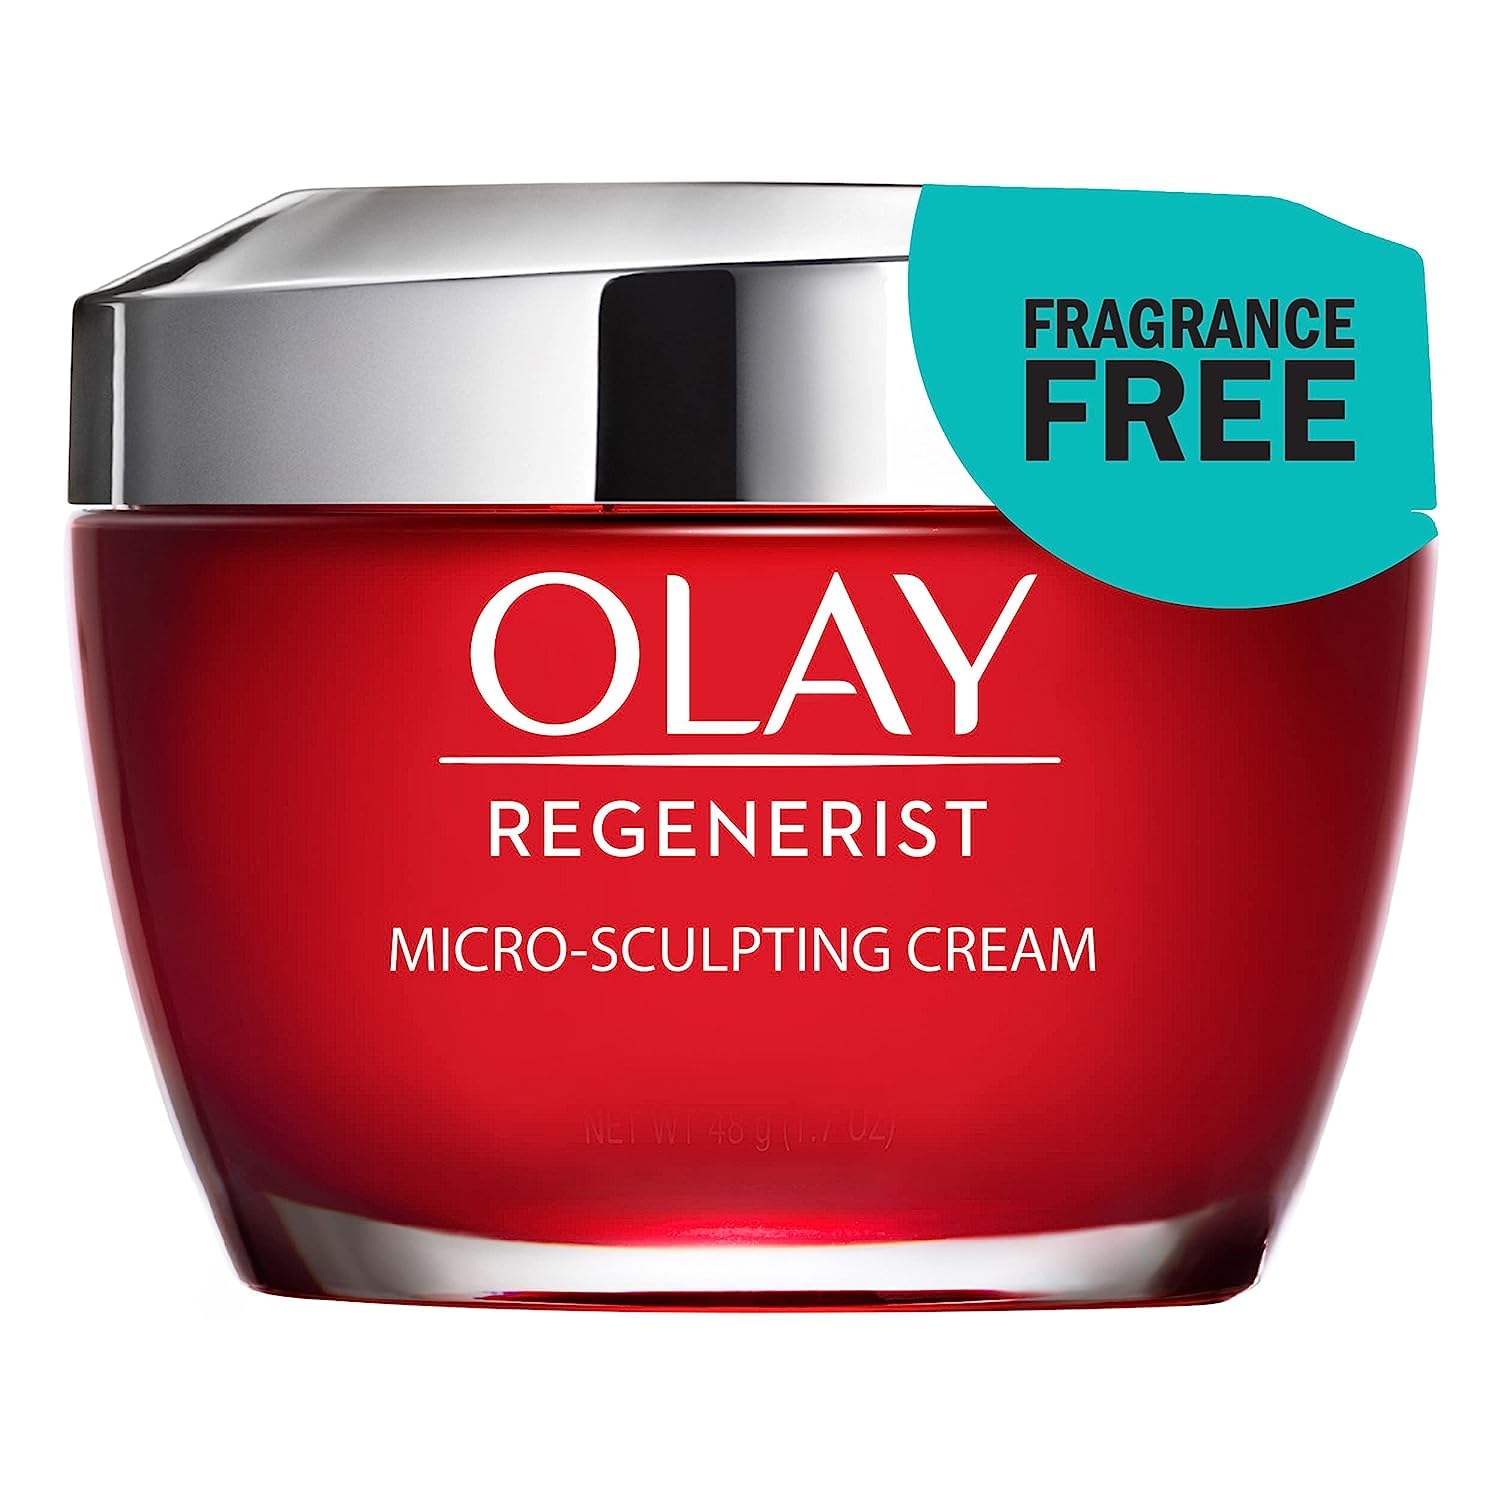 Olay Regenerist Micro-Sculpting Cream Face Moisturizer